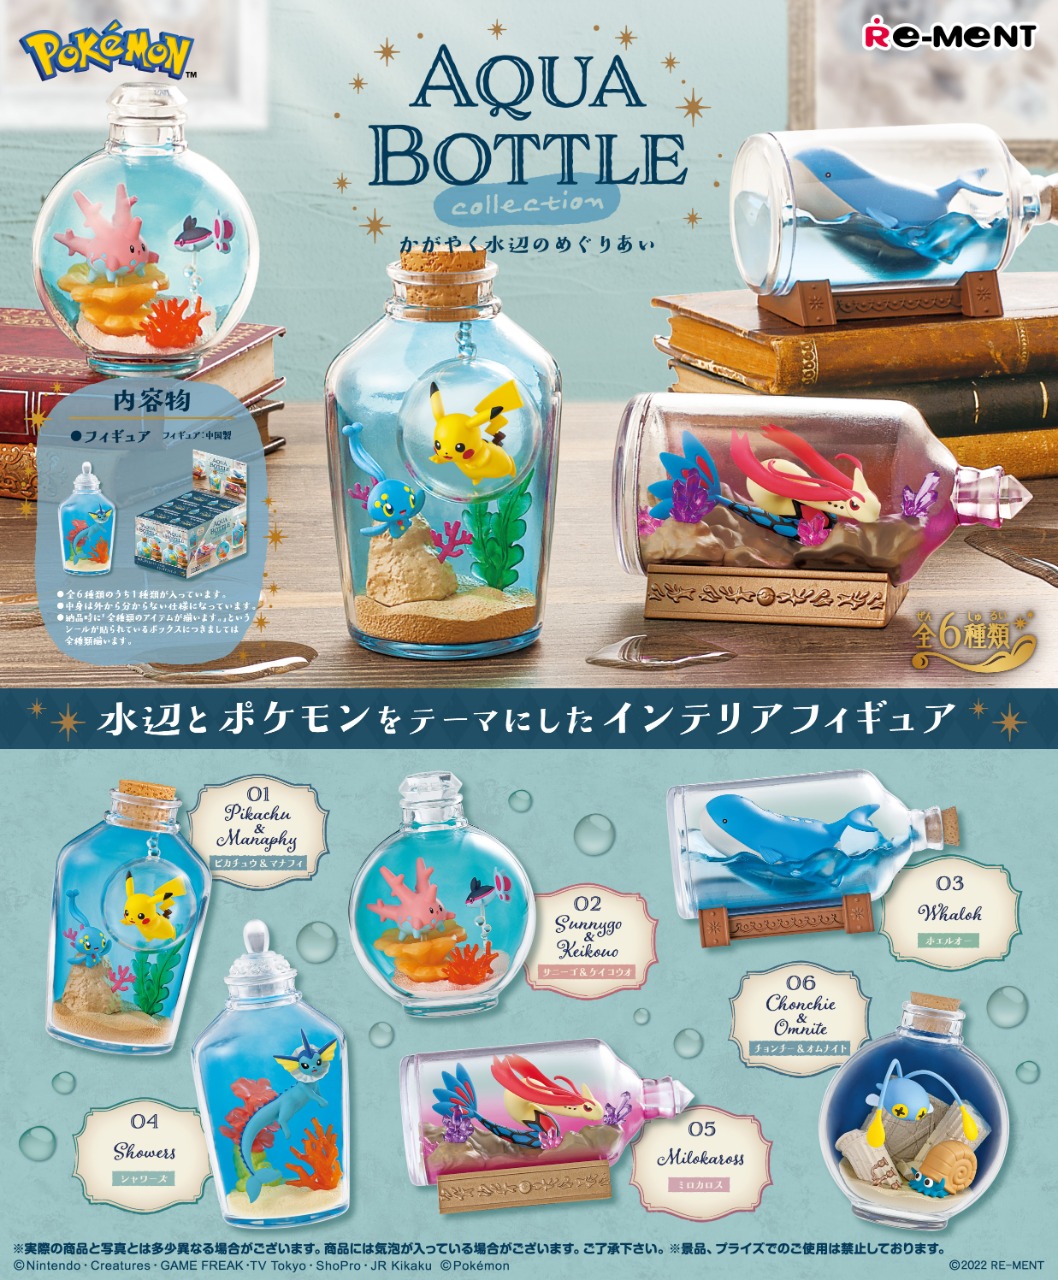 Re-Ment Aqua Bottle